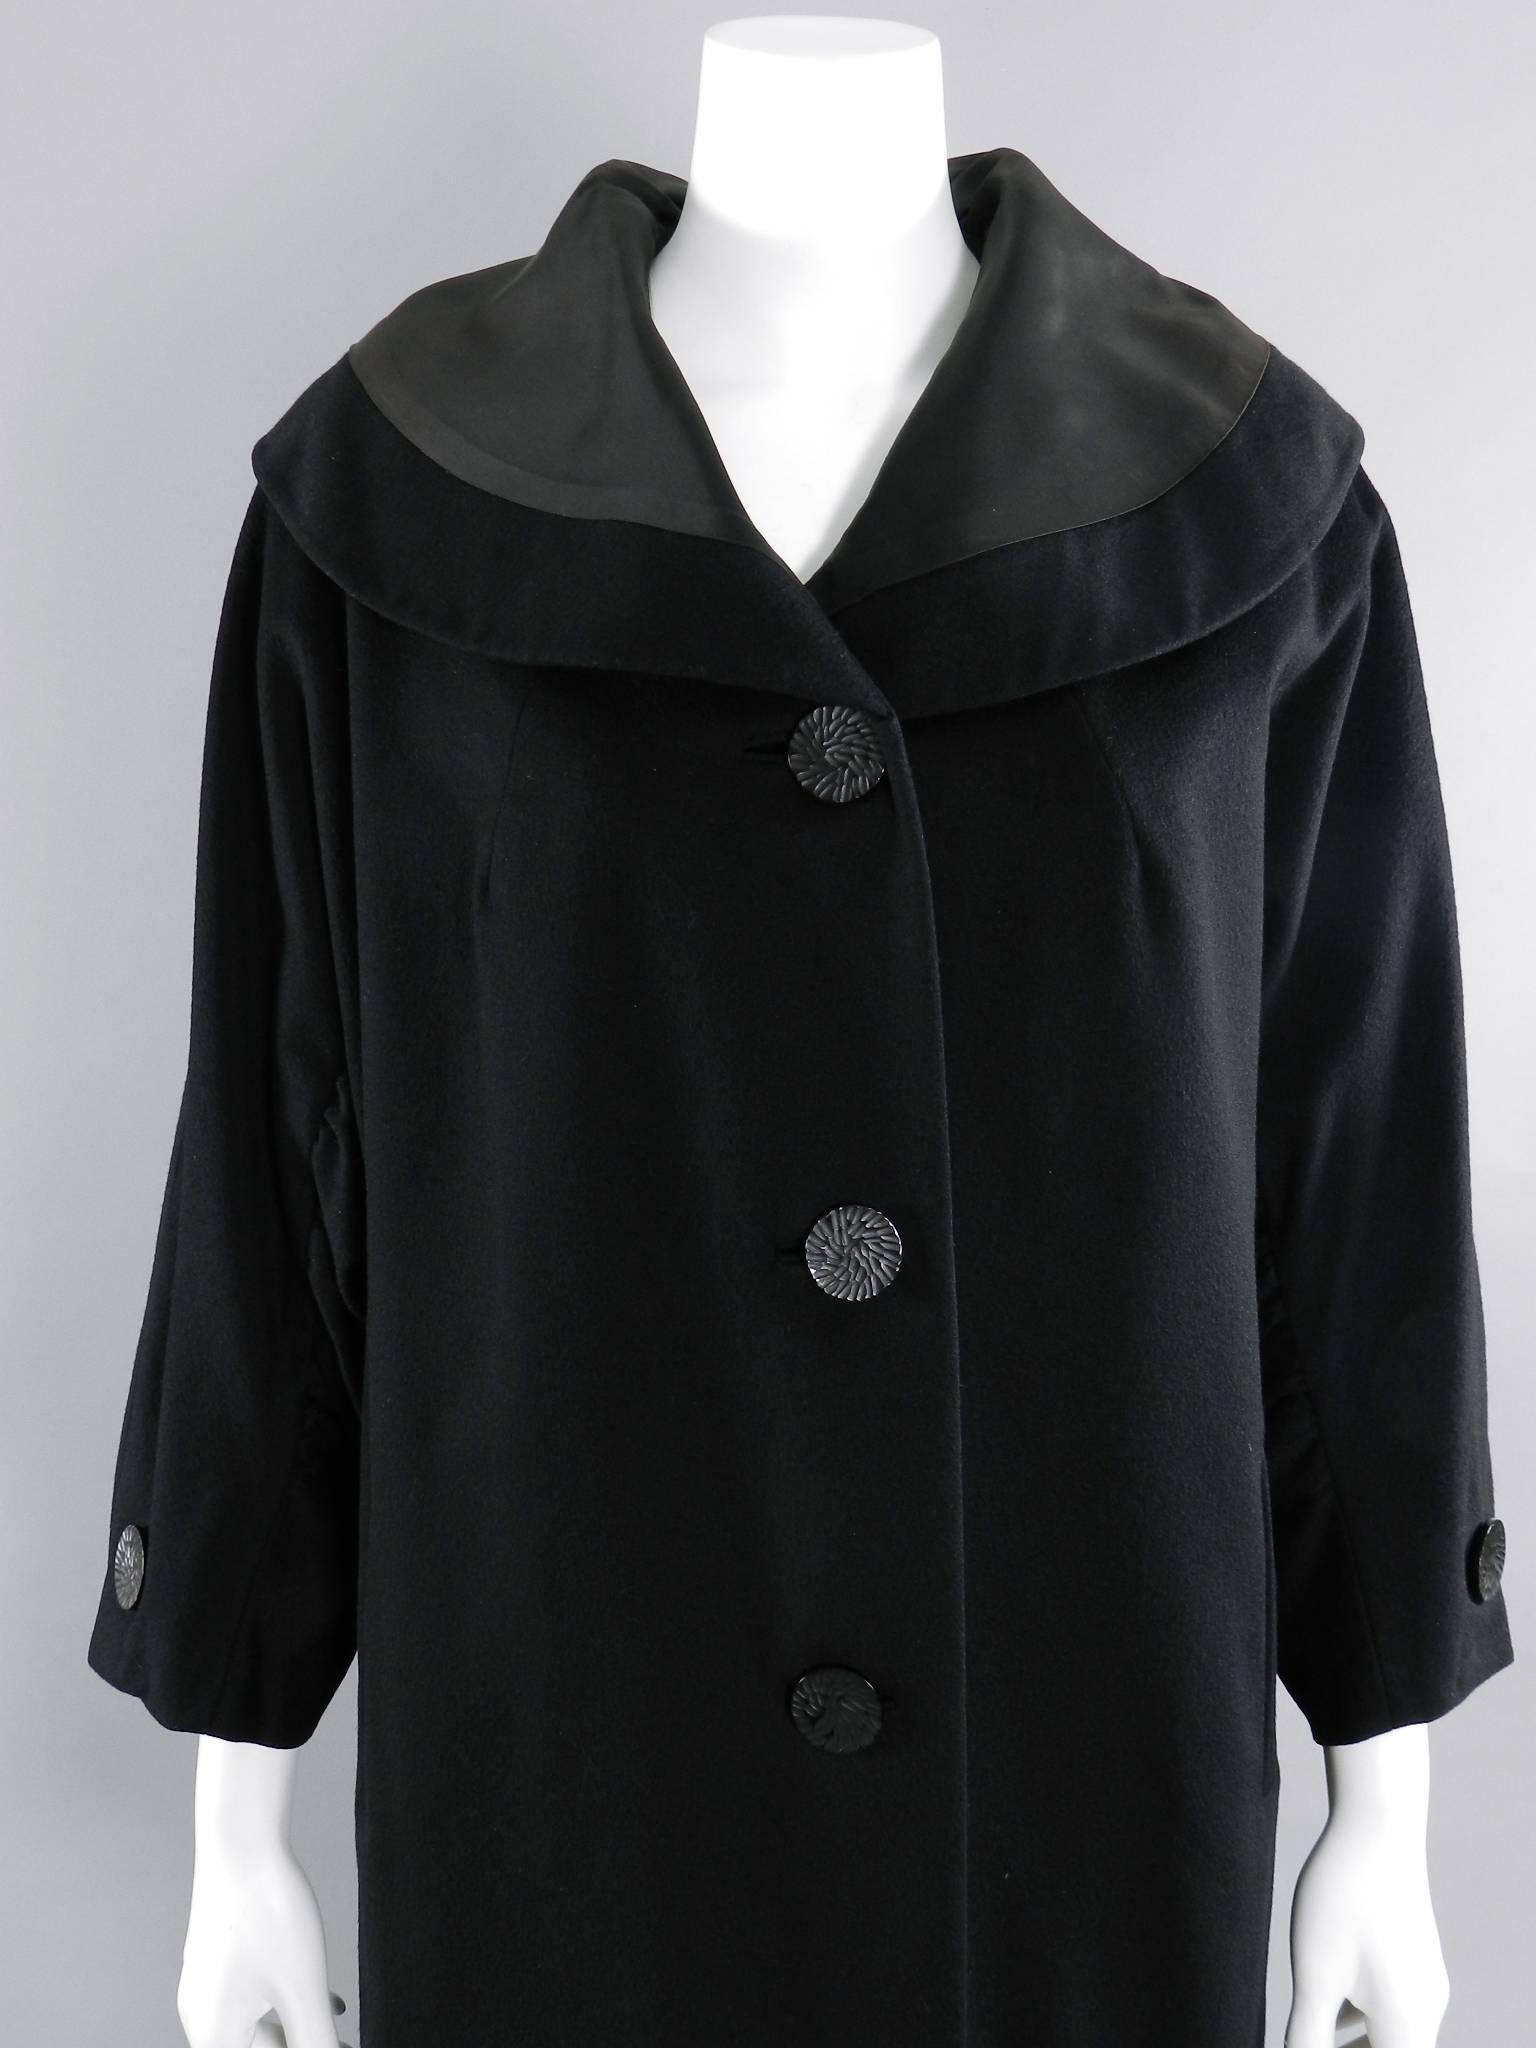 Women's Vintage 1950's Norman Hartnell Black Wool Coat